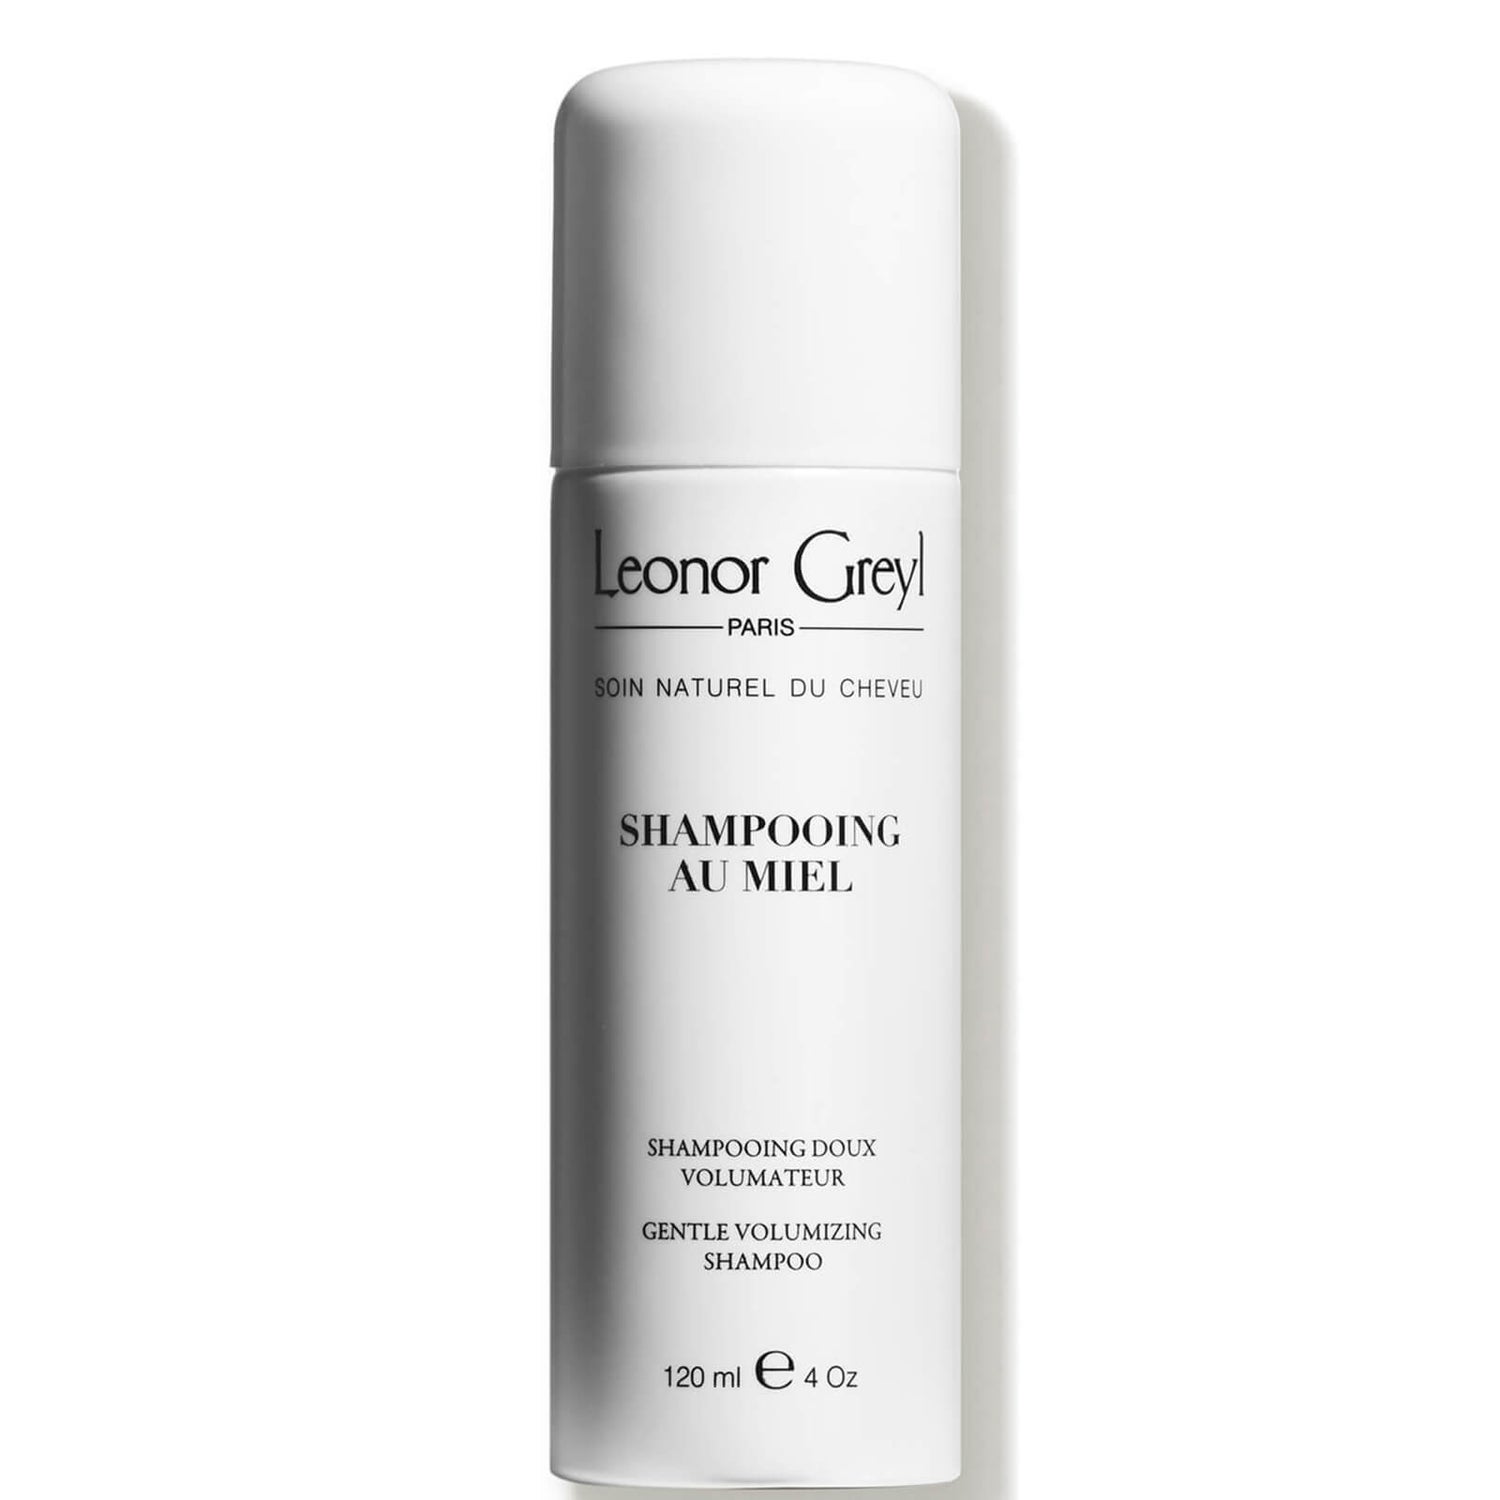 Leonor Greyl Shampooing au Miel Gentle Volumizing Shampoo (4 oz.)